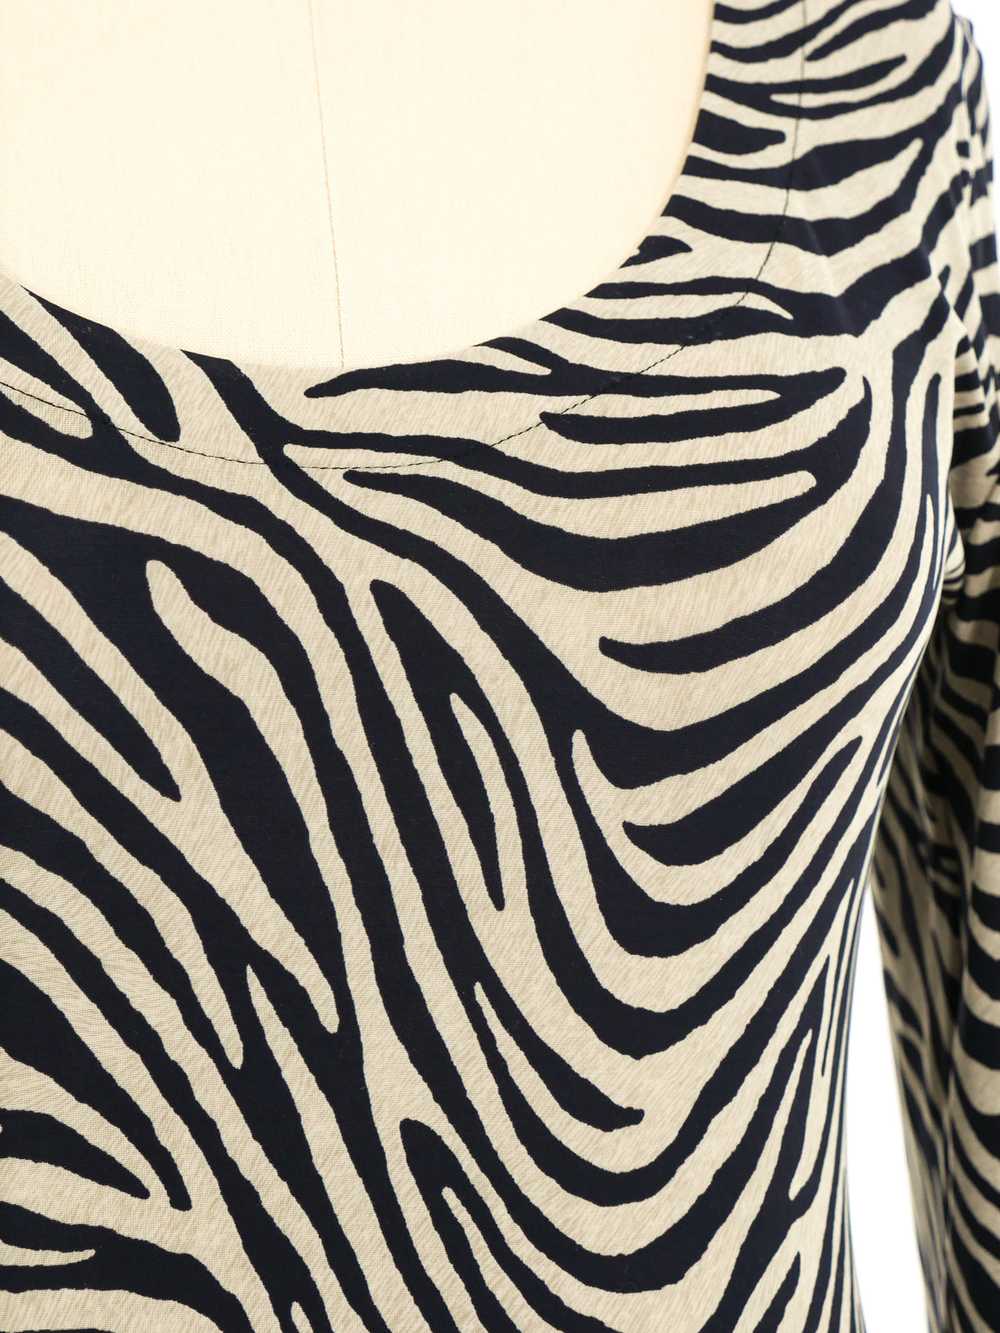 Christian Dior Zebra Print Bodysuit - image 2